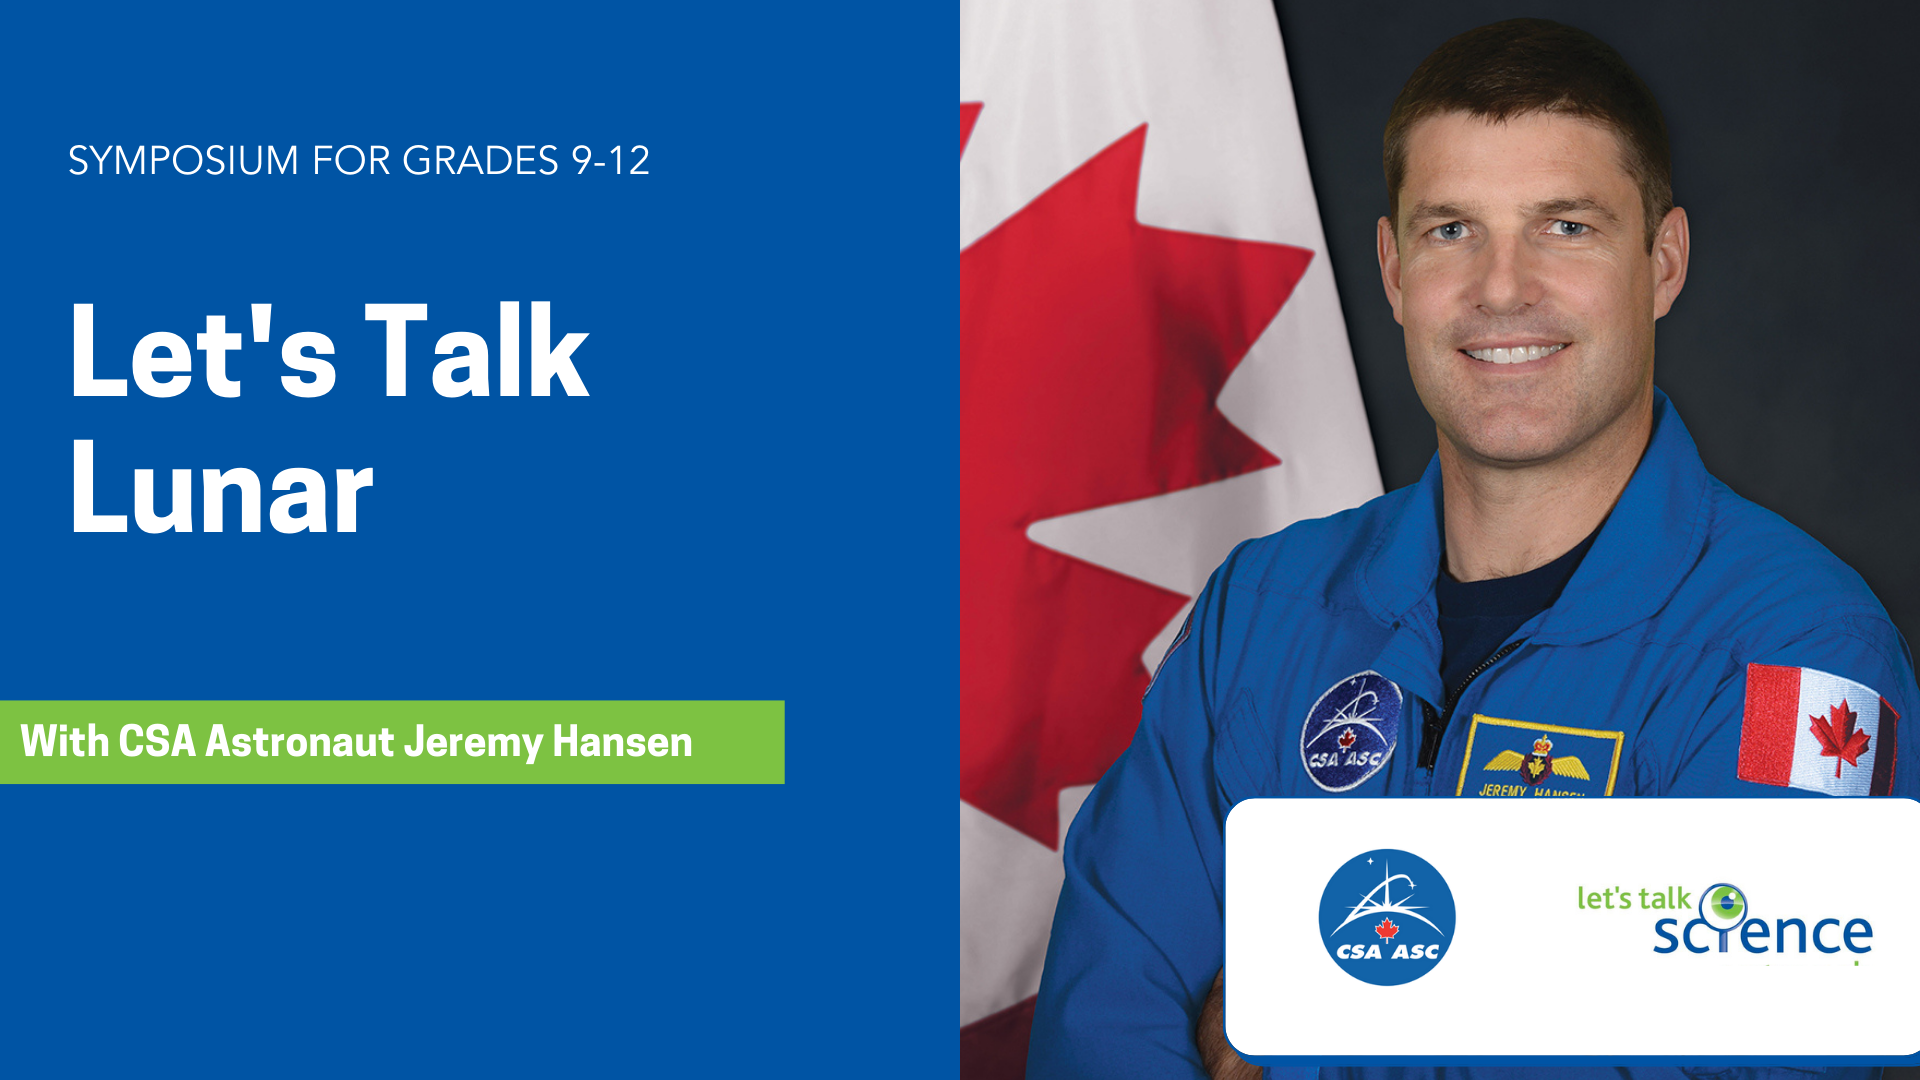 Let's Talk Lunar with CSA astronaut Jeremy Hansen